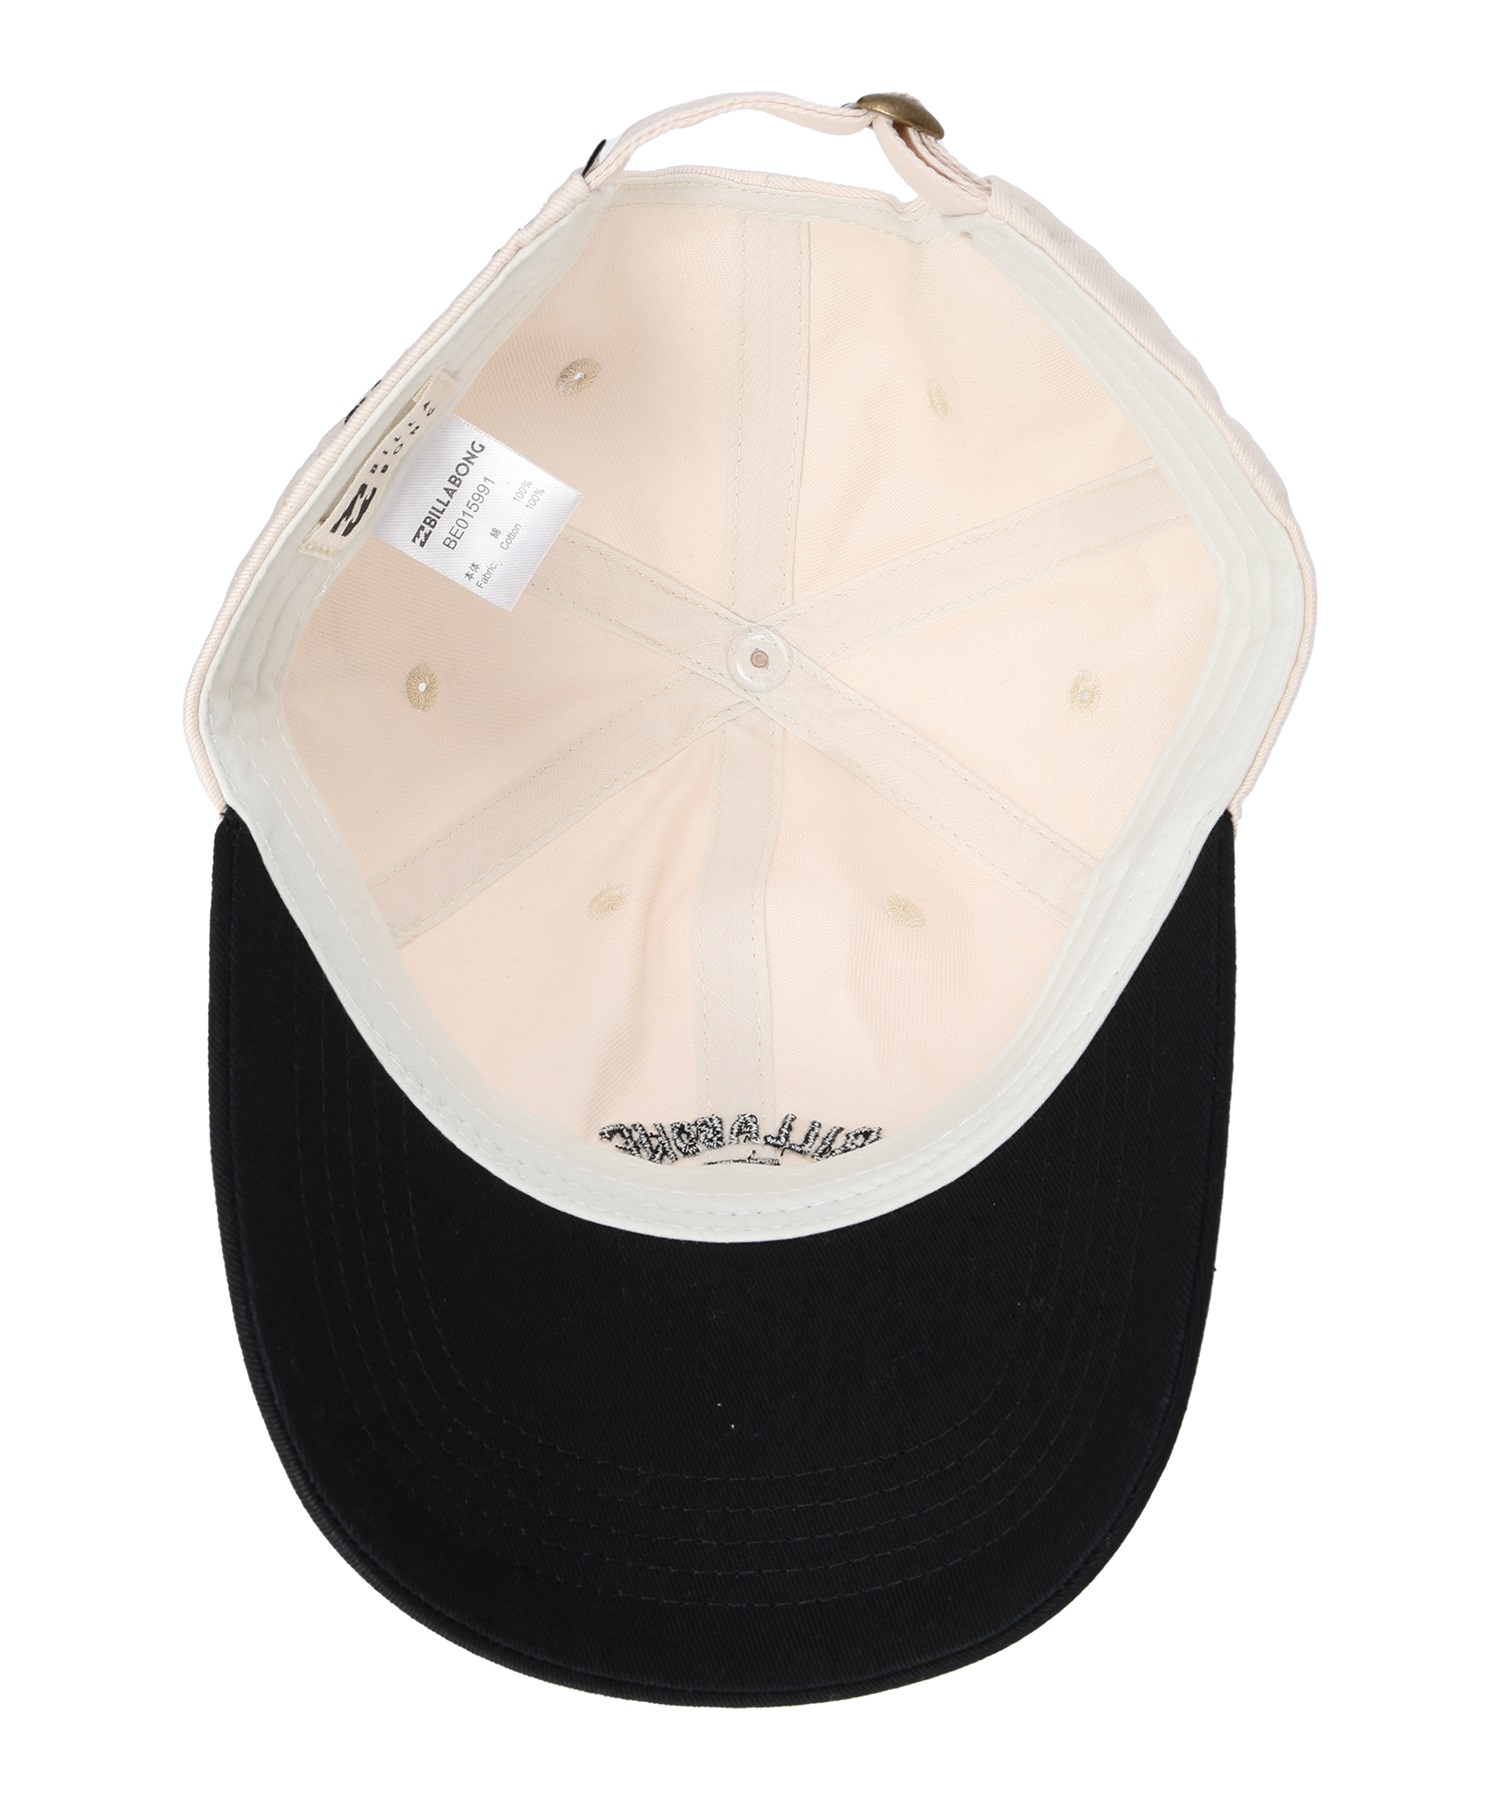 BILLABONG ビラボン CAP  BE015-991 キッズ キャップ(BLK-F)